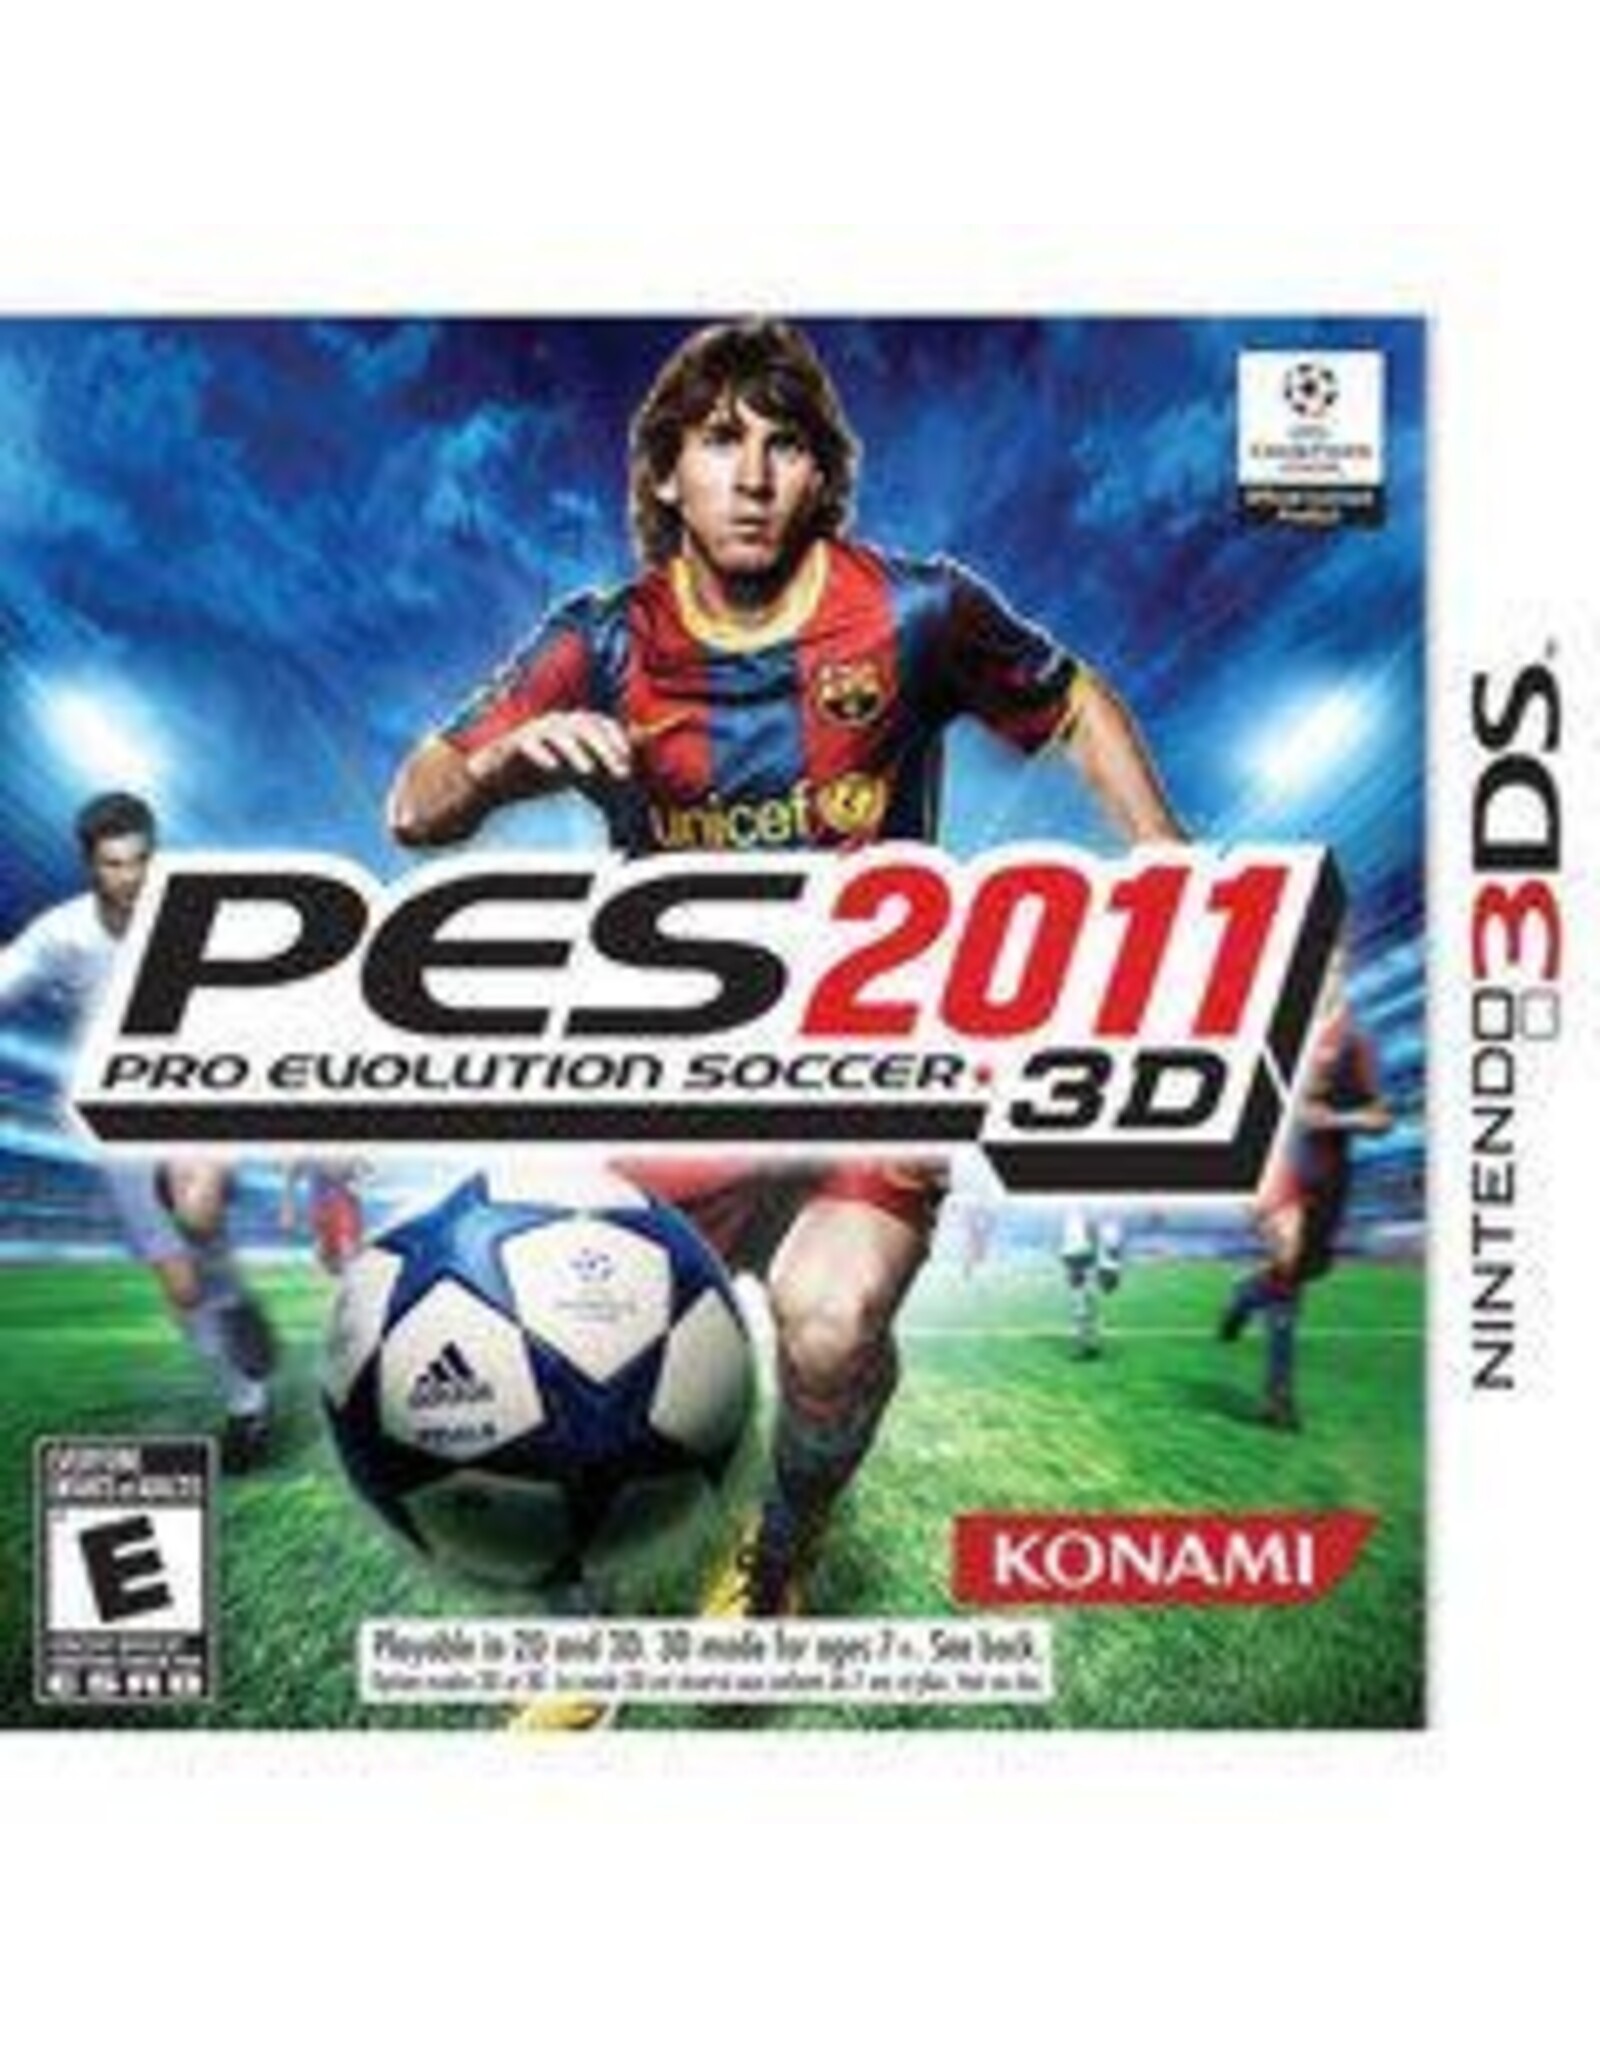 Nintendo 3DS Pro Evolution Soccer 2011 (Cart Only)